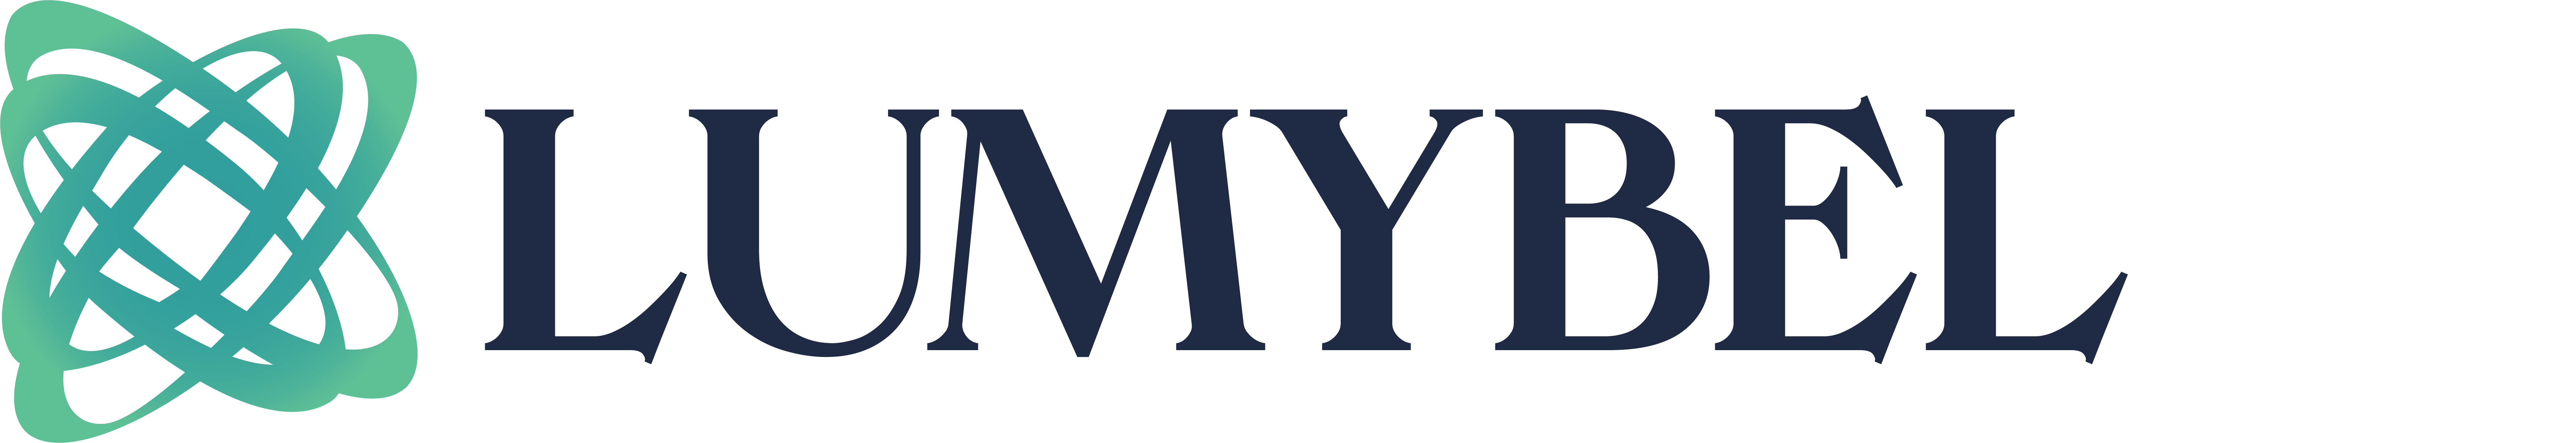 Lumybel logo with Dark Blue text